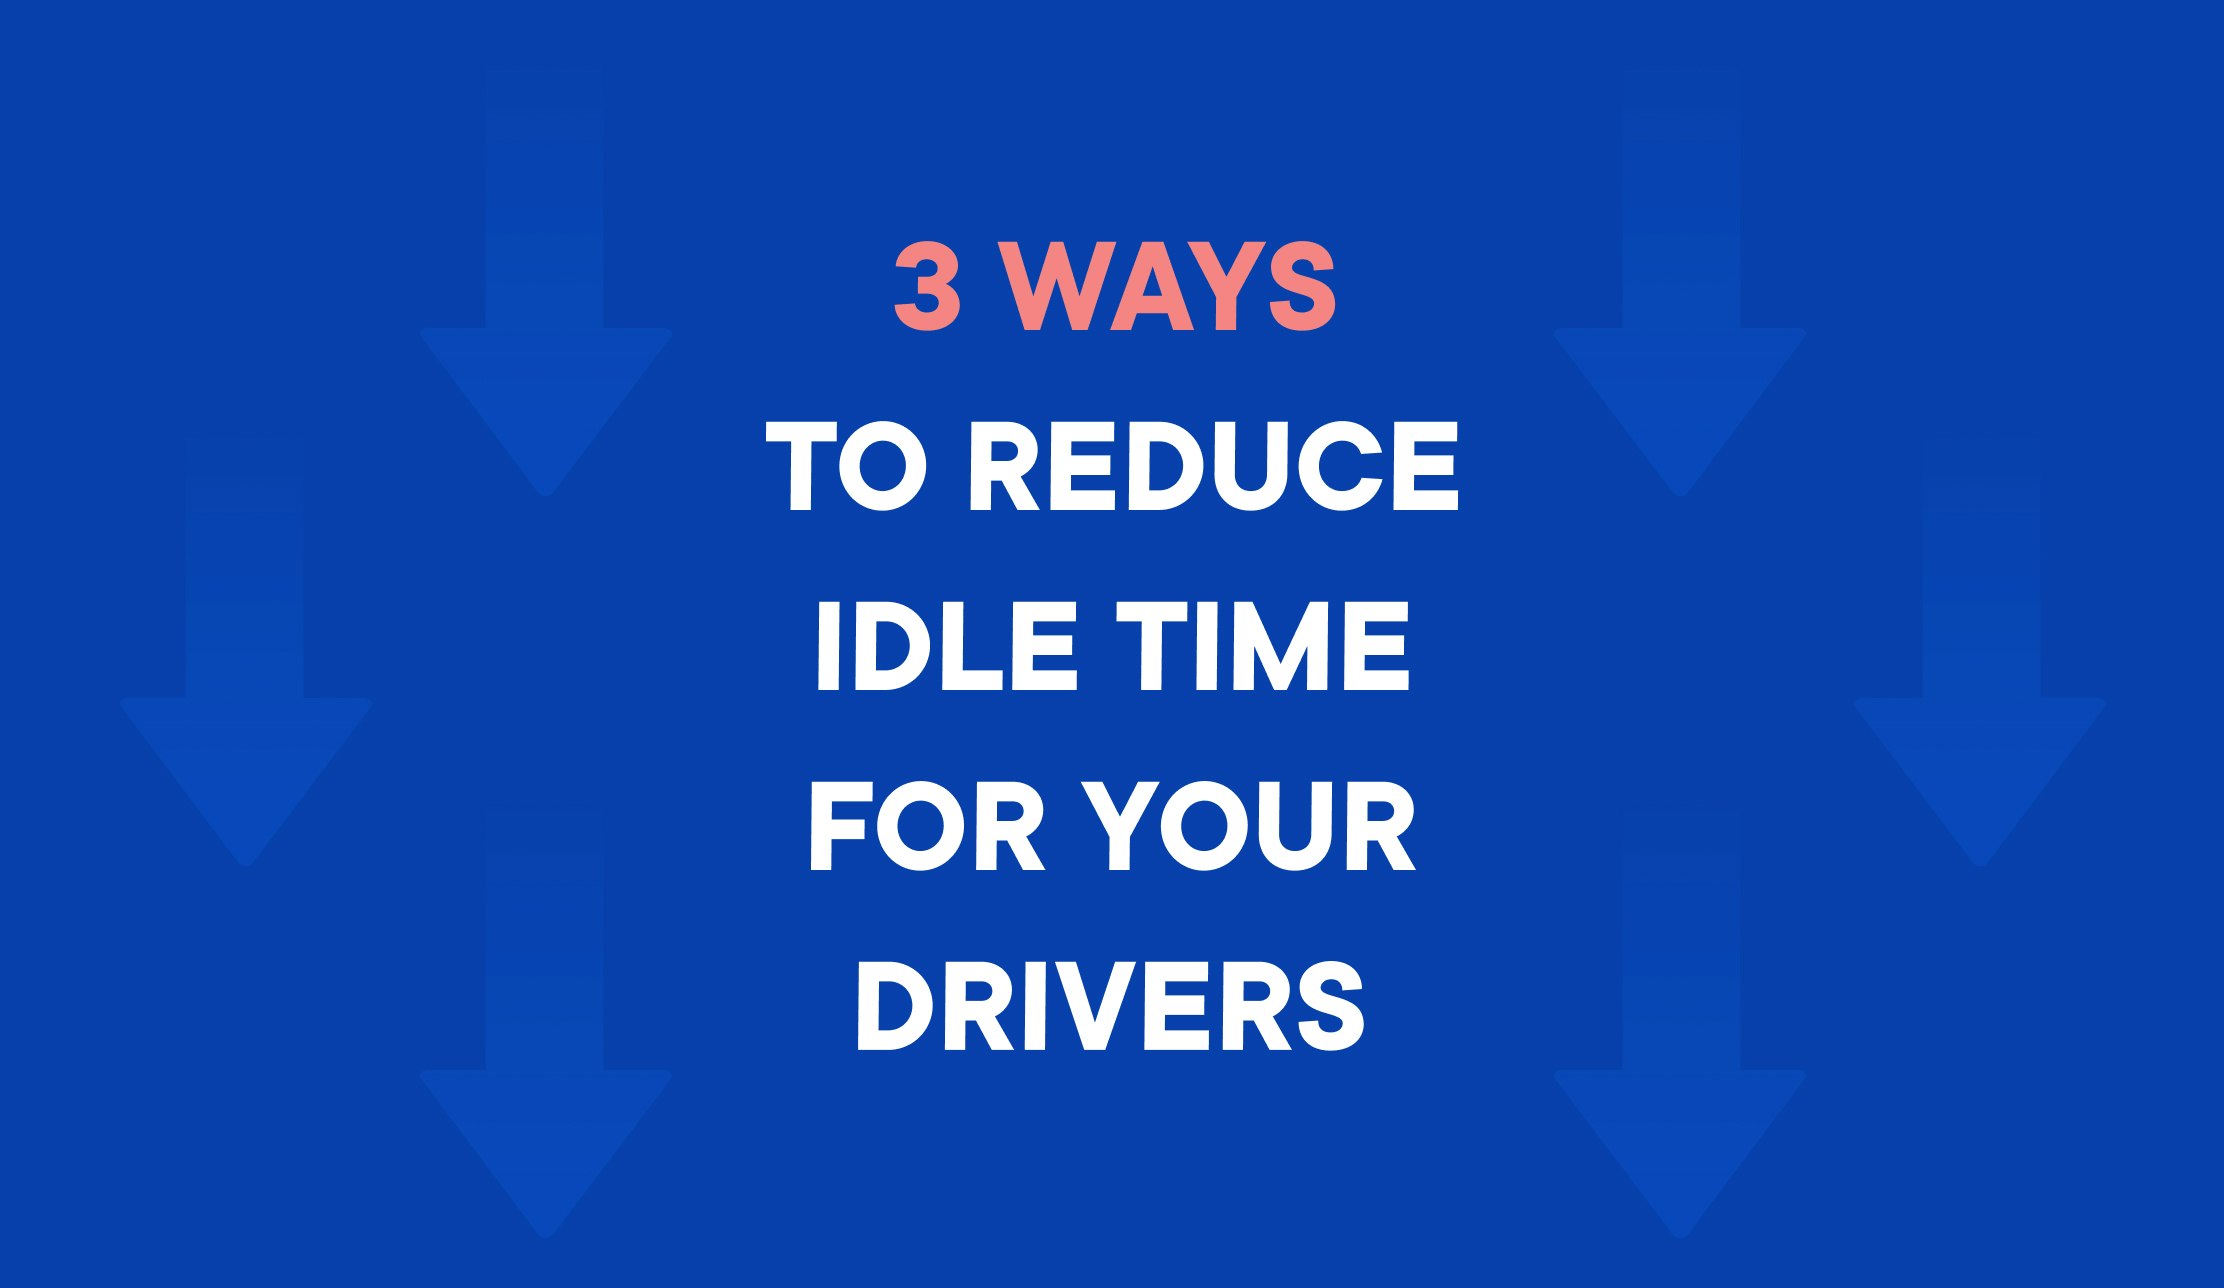 3 ways to reduce idling time